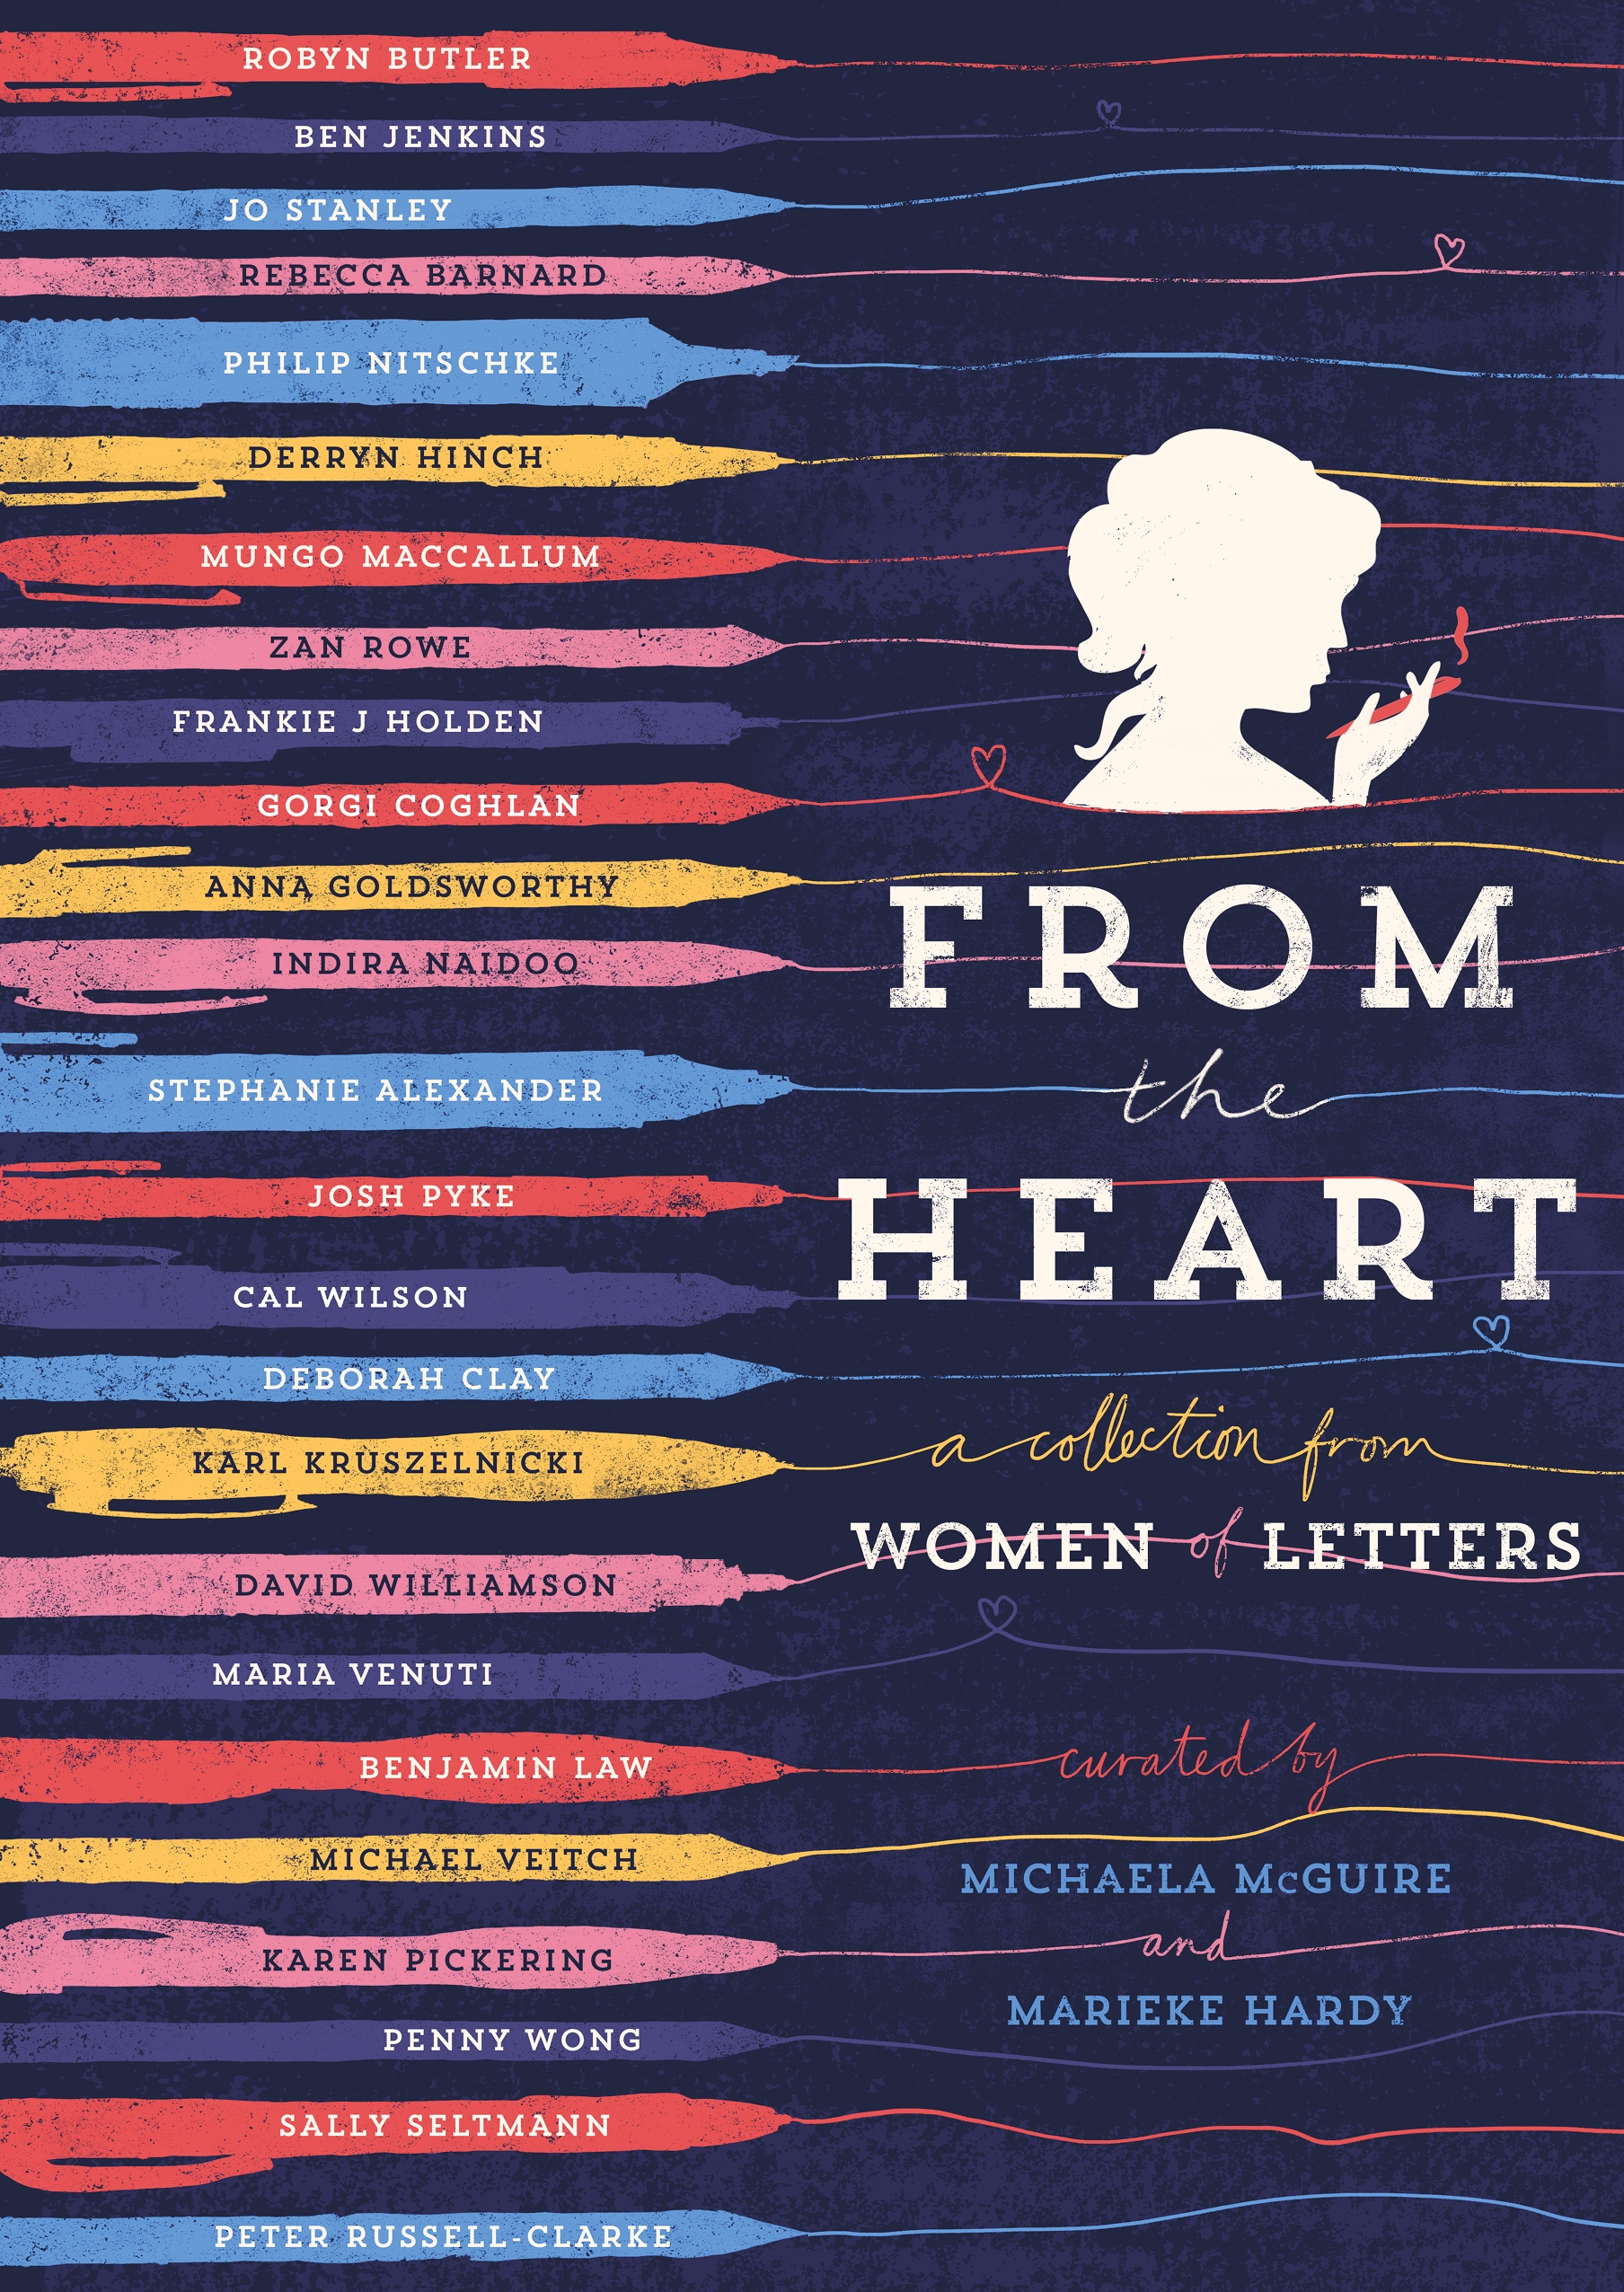 From The Heart: Women of Letters - Karen Pickering chapter